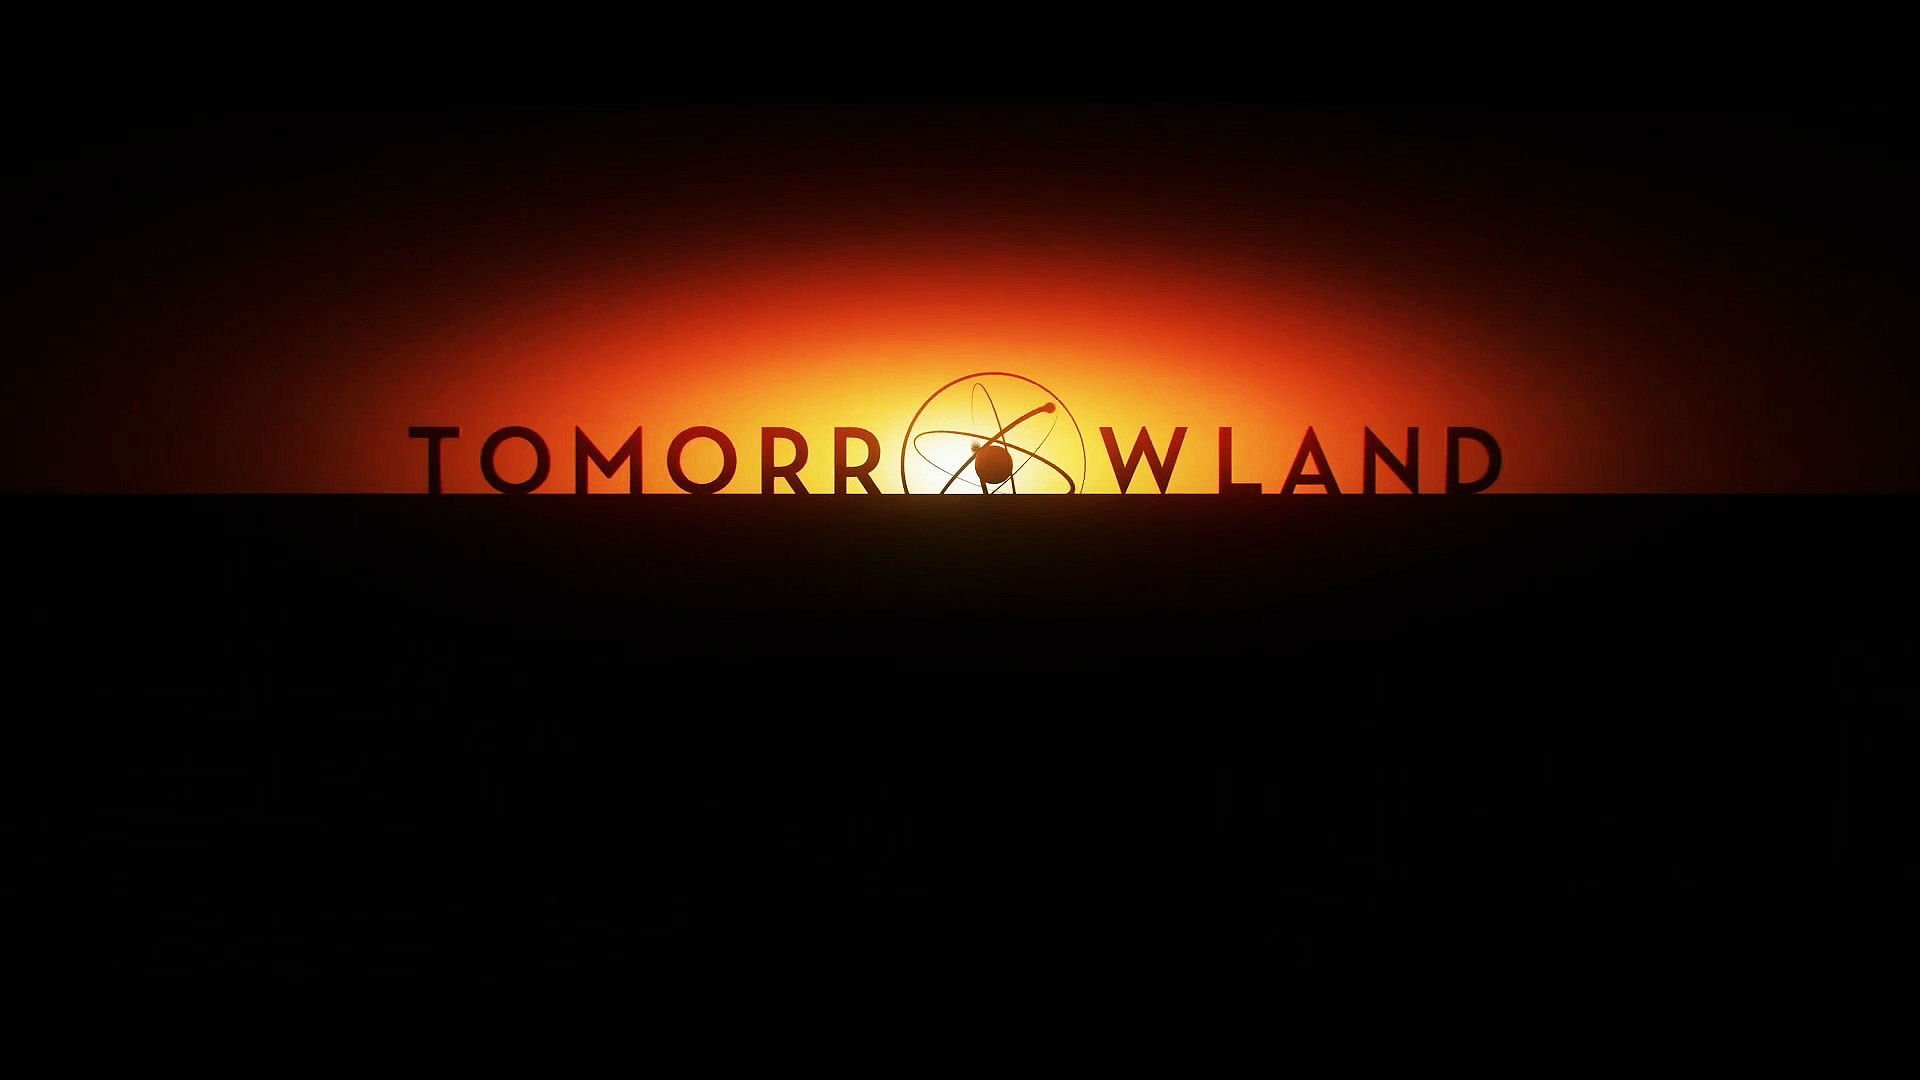 tomorrowland, Action, Adventure, Mystery, Sci fi, Fantasy, Disney, 1tomorrow, Poster Wallpaper